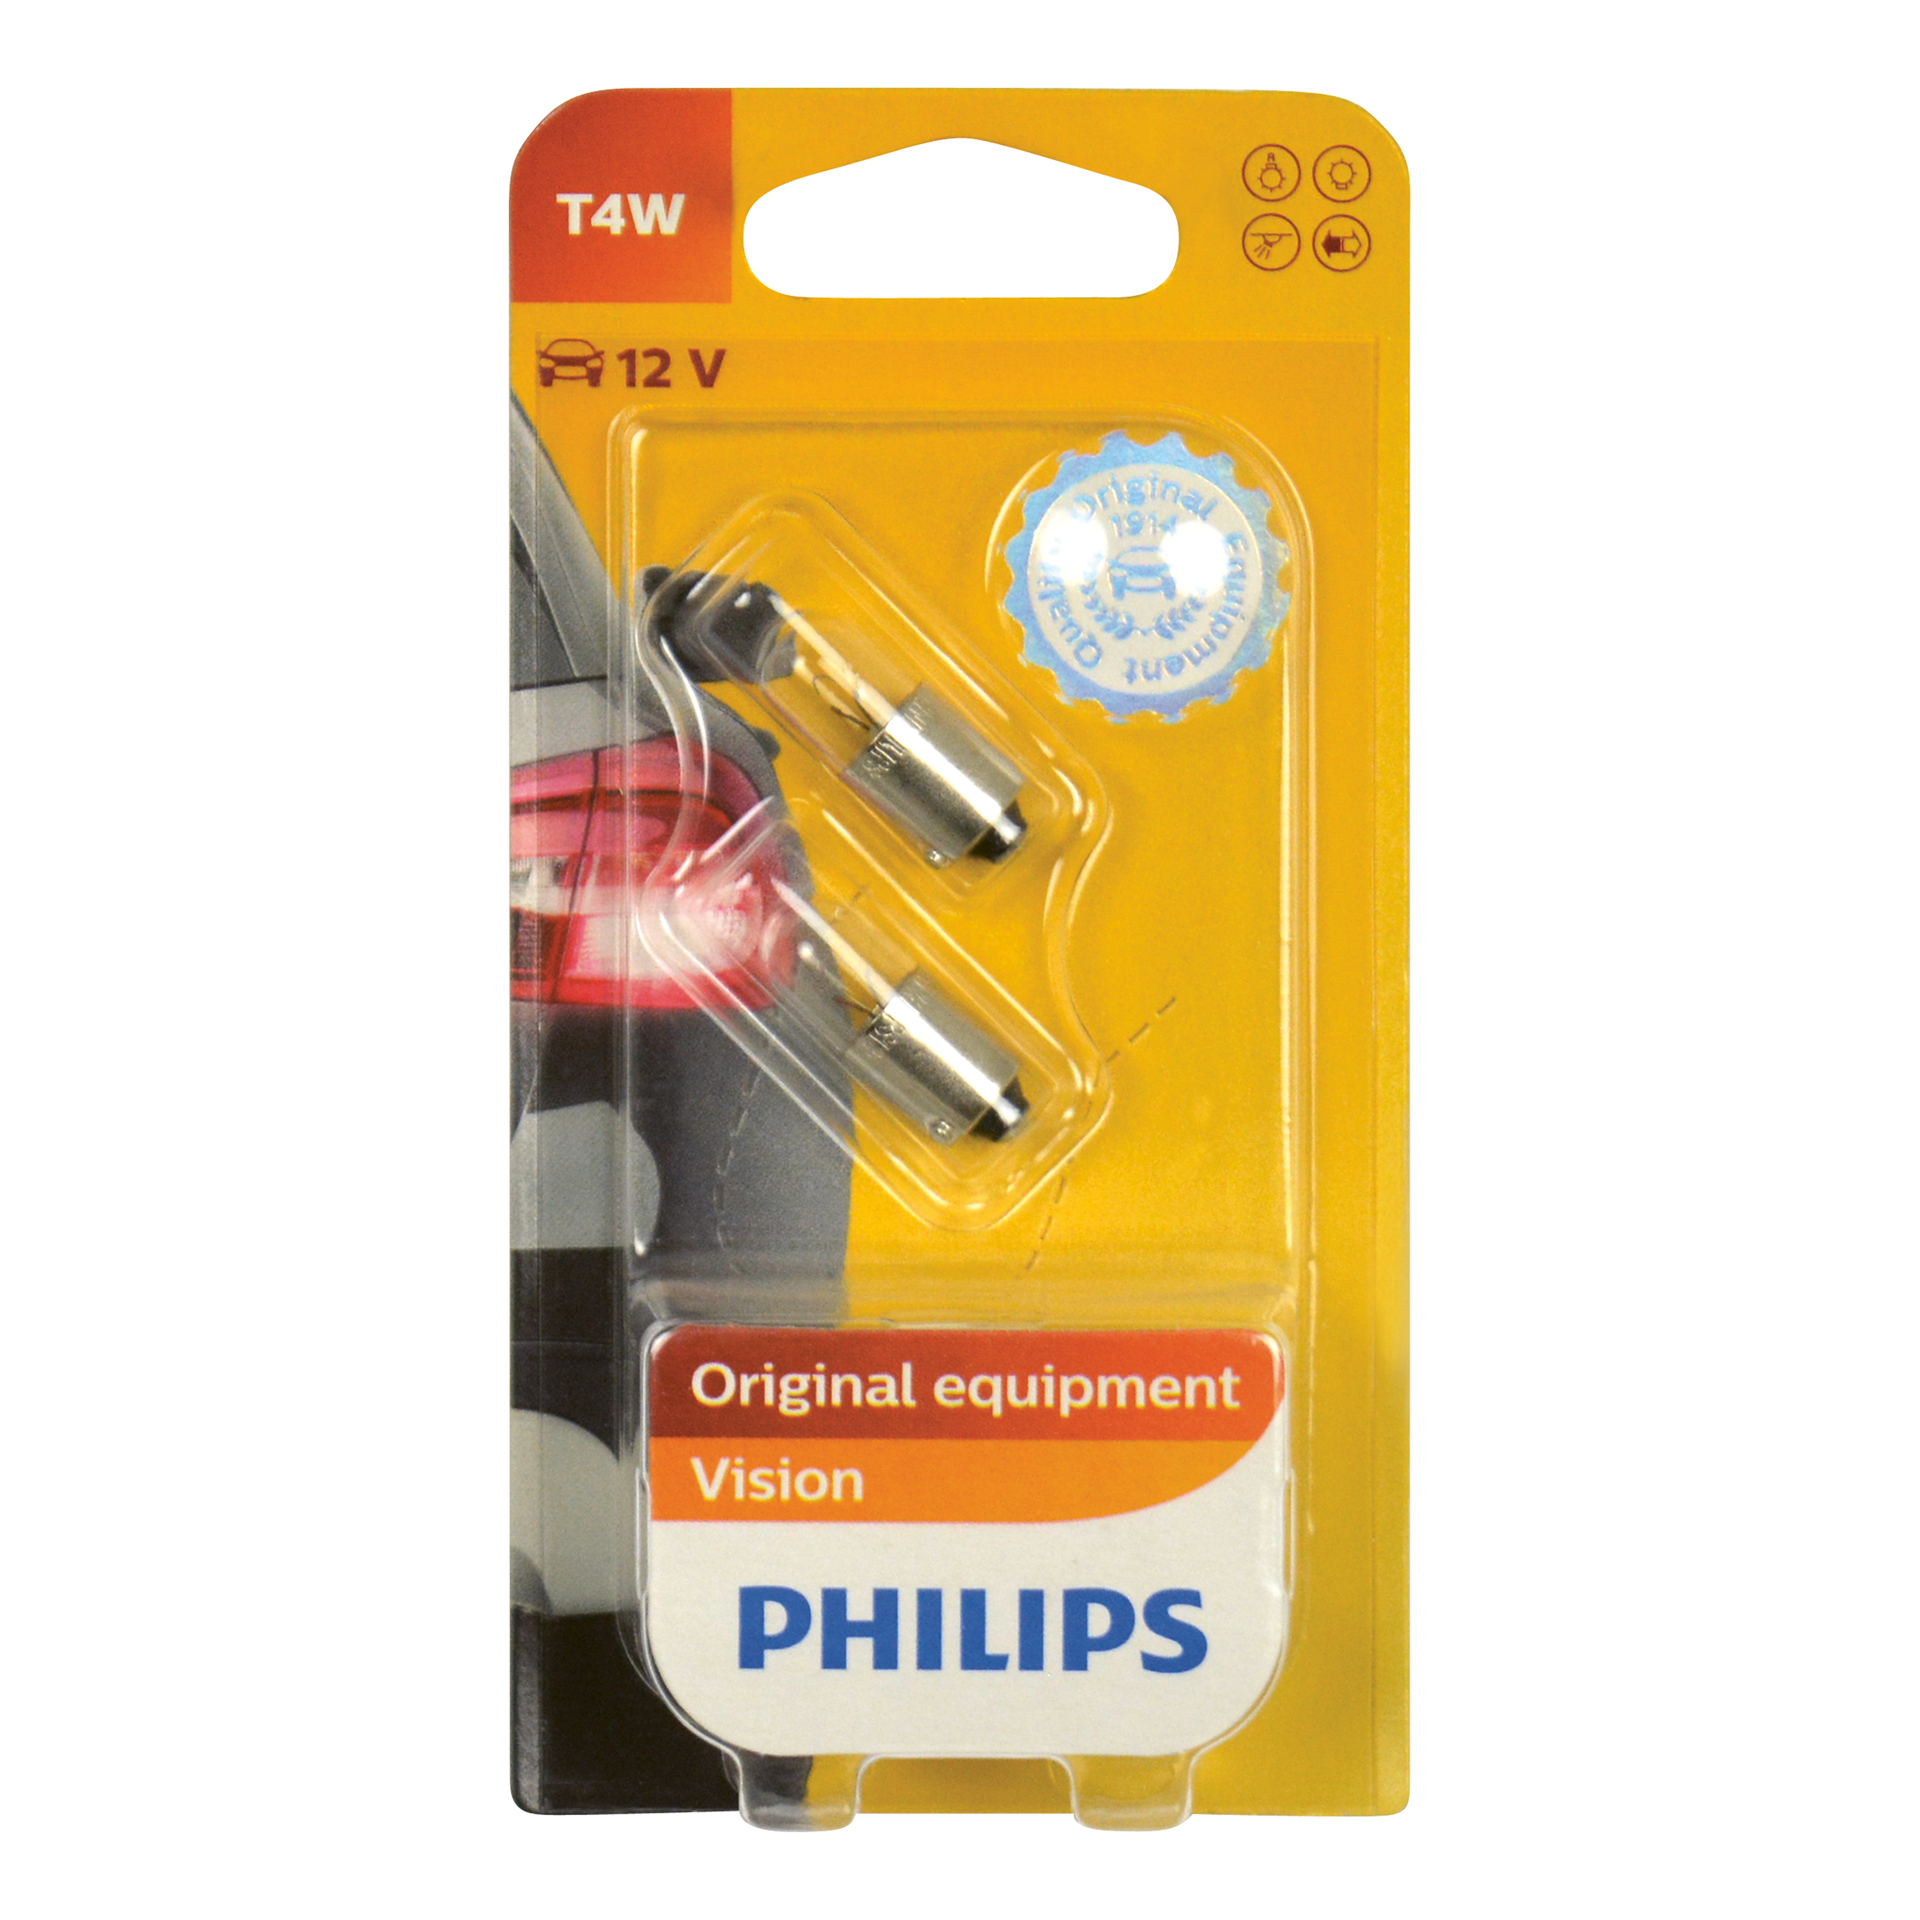 Philips Philips 12929B2 T4W Premium 12V 0730021